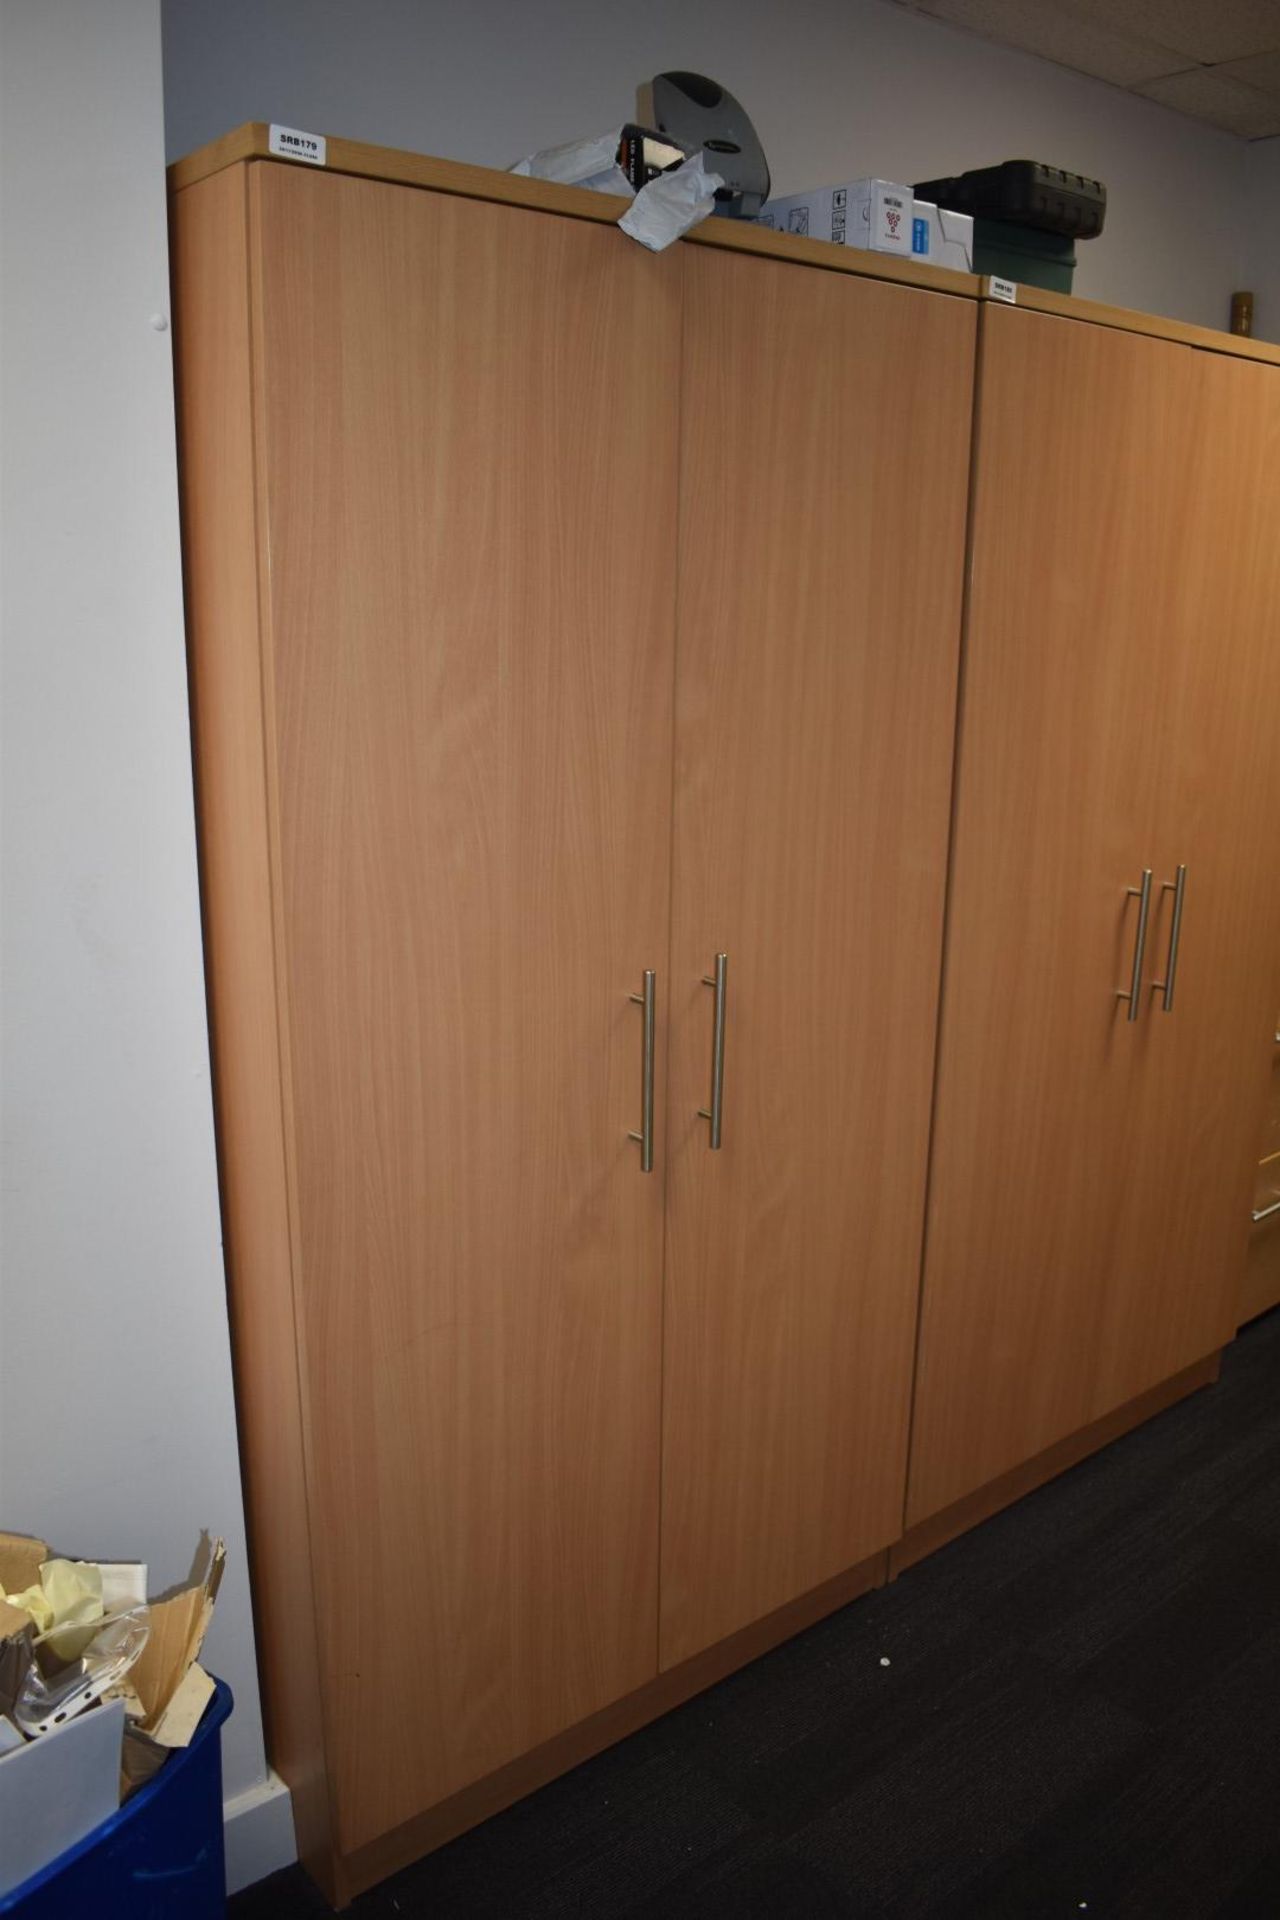 1 x Two Door Office Storage Cabinet in Beech Height 191 x Width 55 cms SRB179